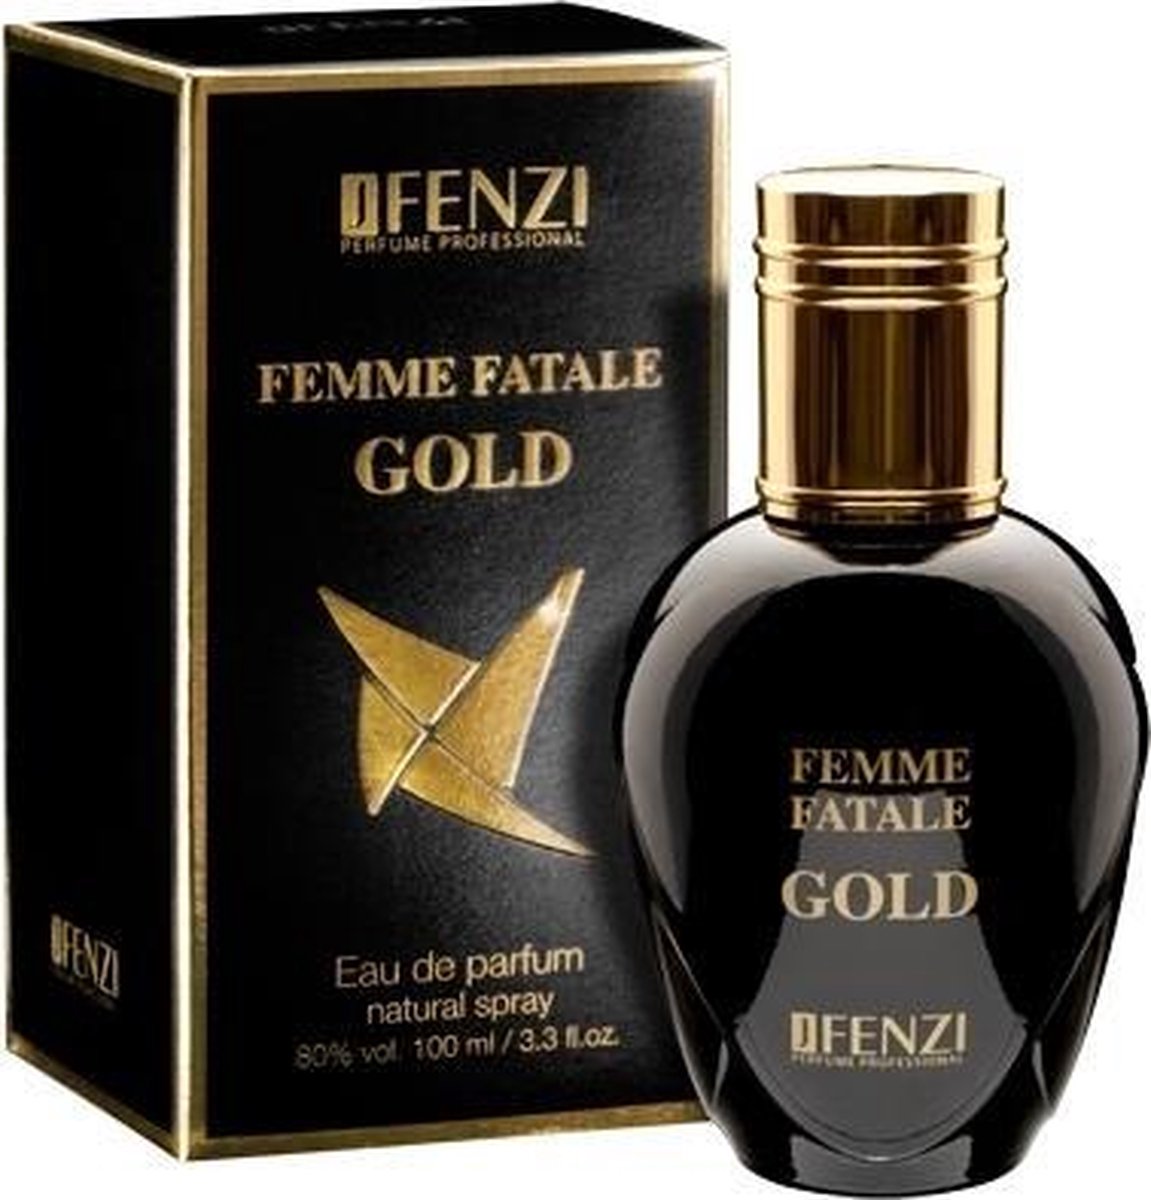 Oriëntaals, Bloemige merkgeur voor dames - JFenzi - Femme Fatale Gold - Eau de Parfum - 80% - 100ml ✮✮✮✮✮ - Cadeau Tip !